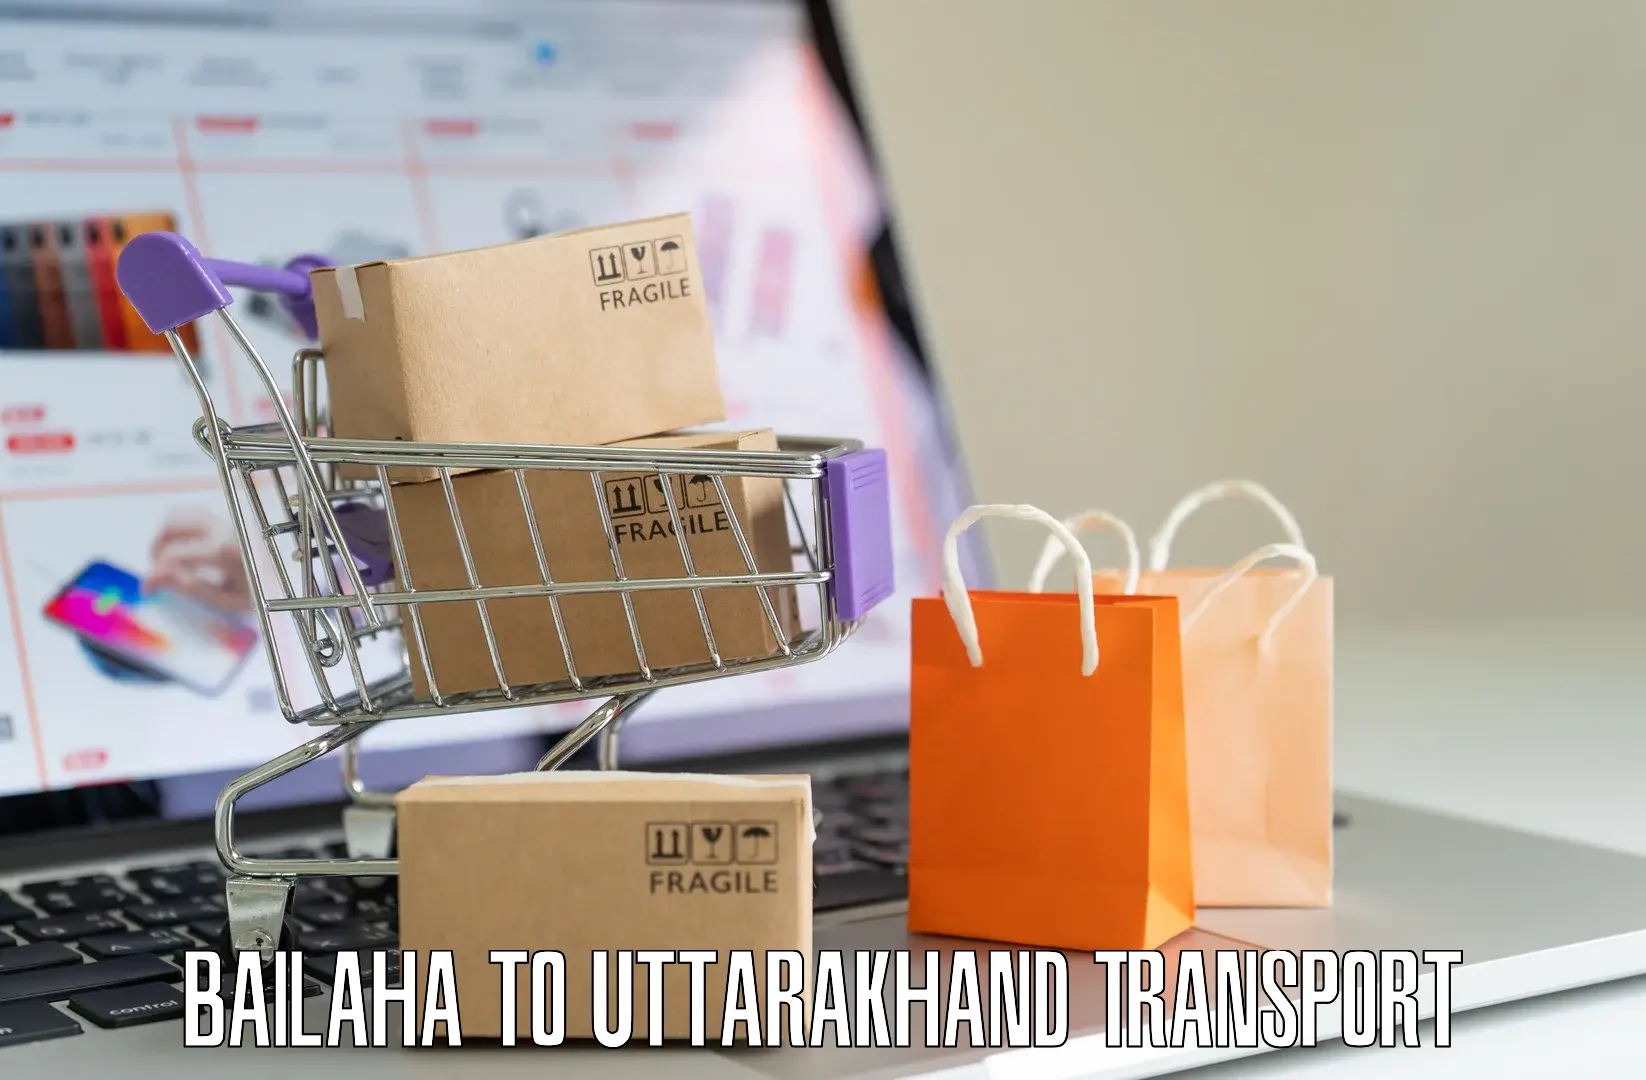 Furniture transport service Bailaha to Uttarakhand